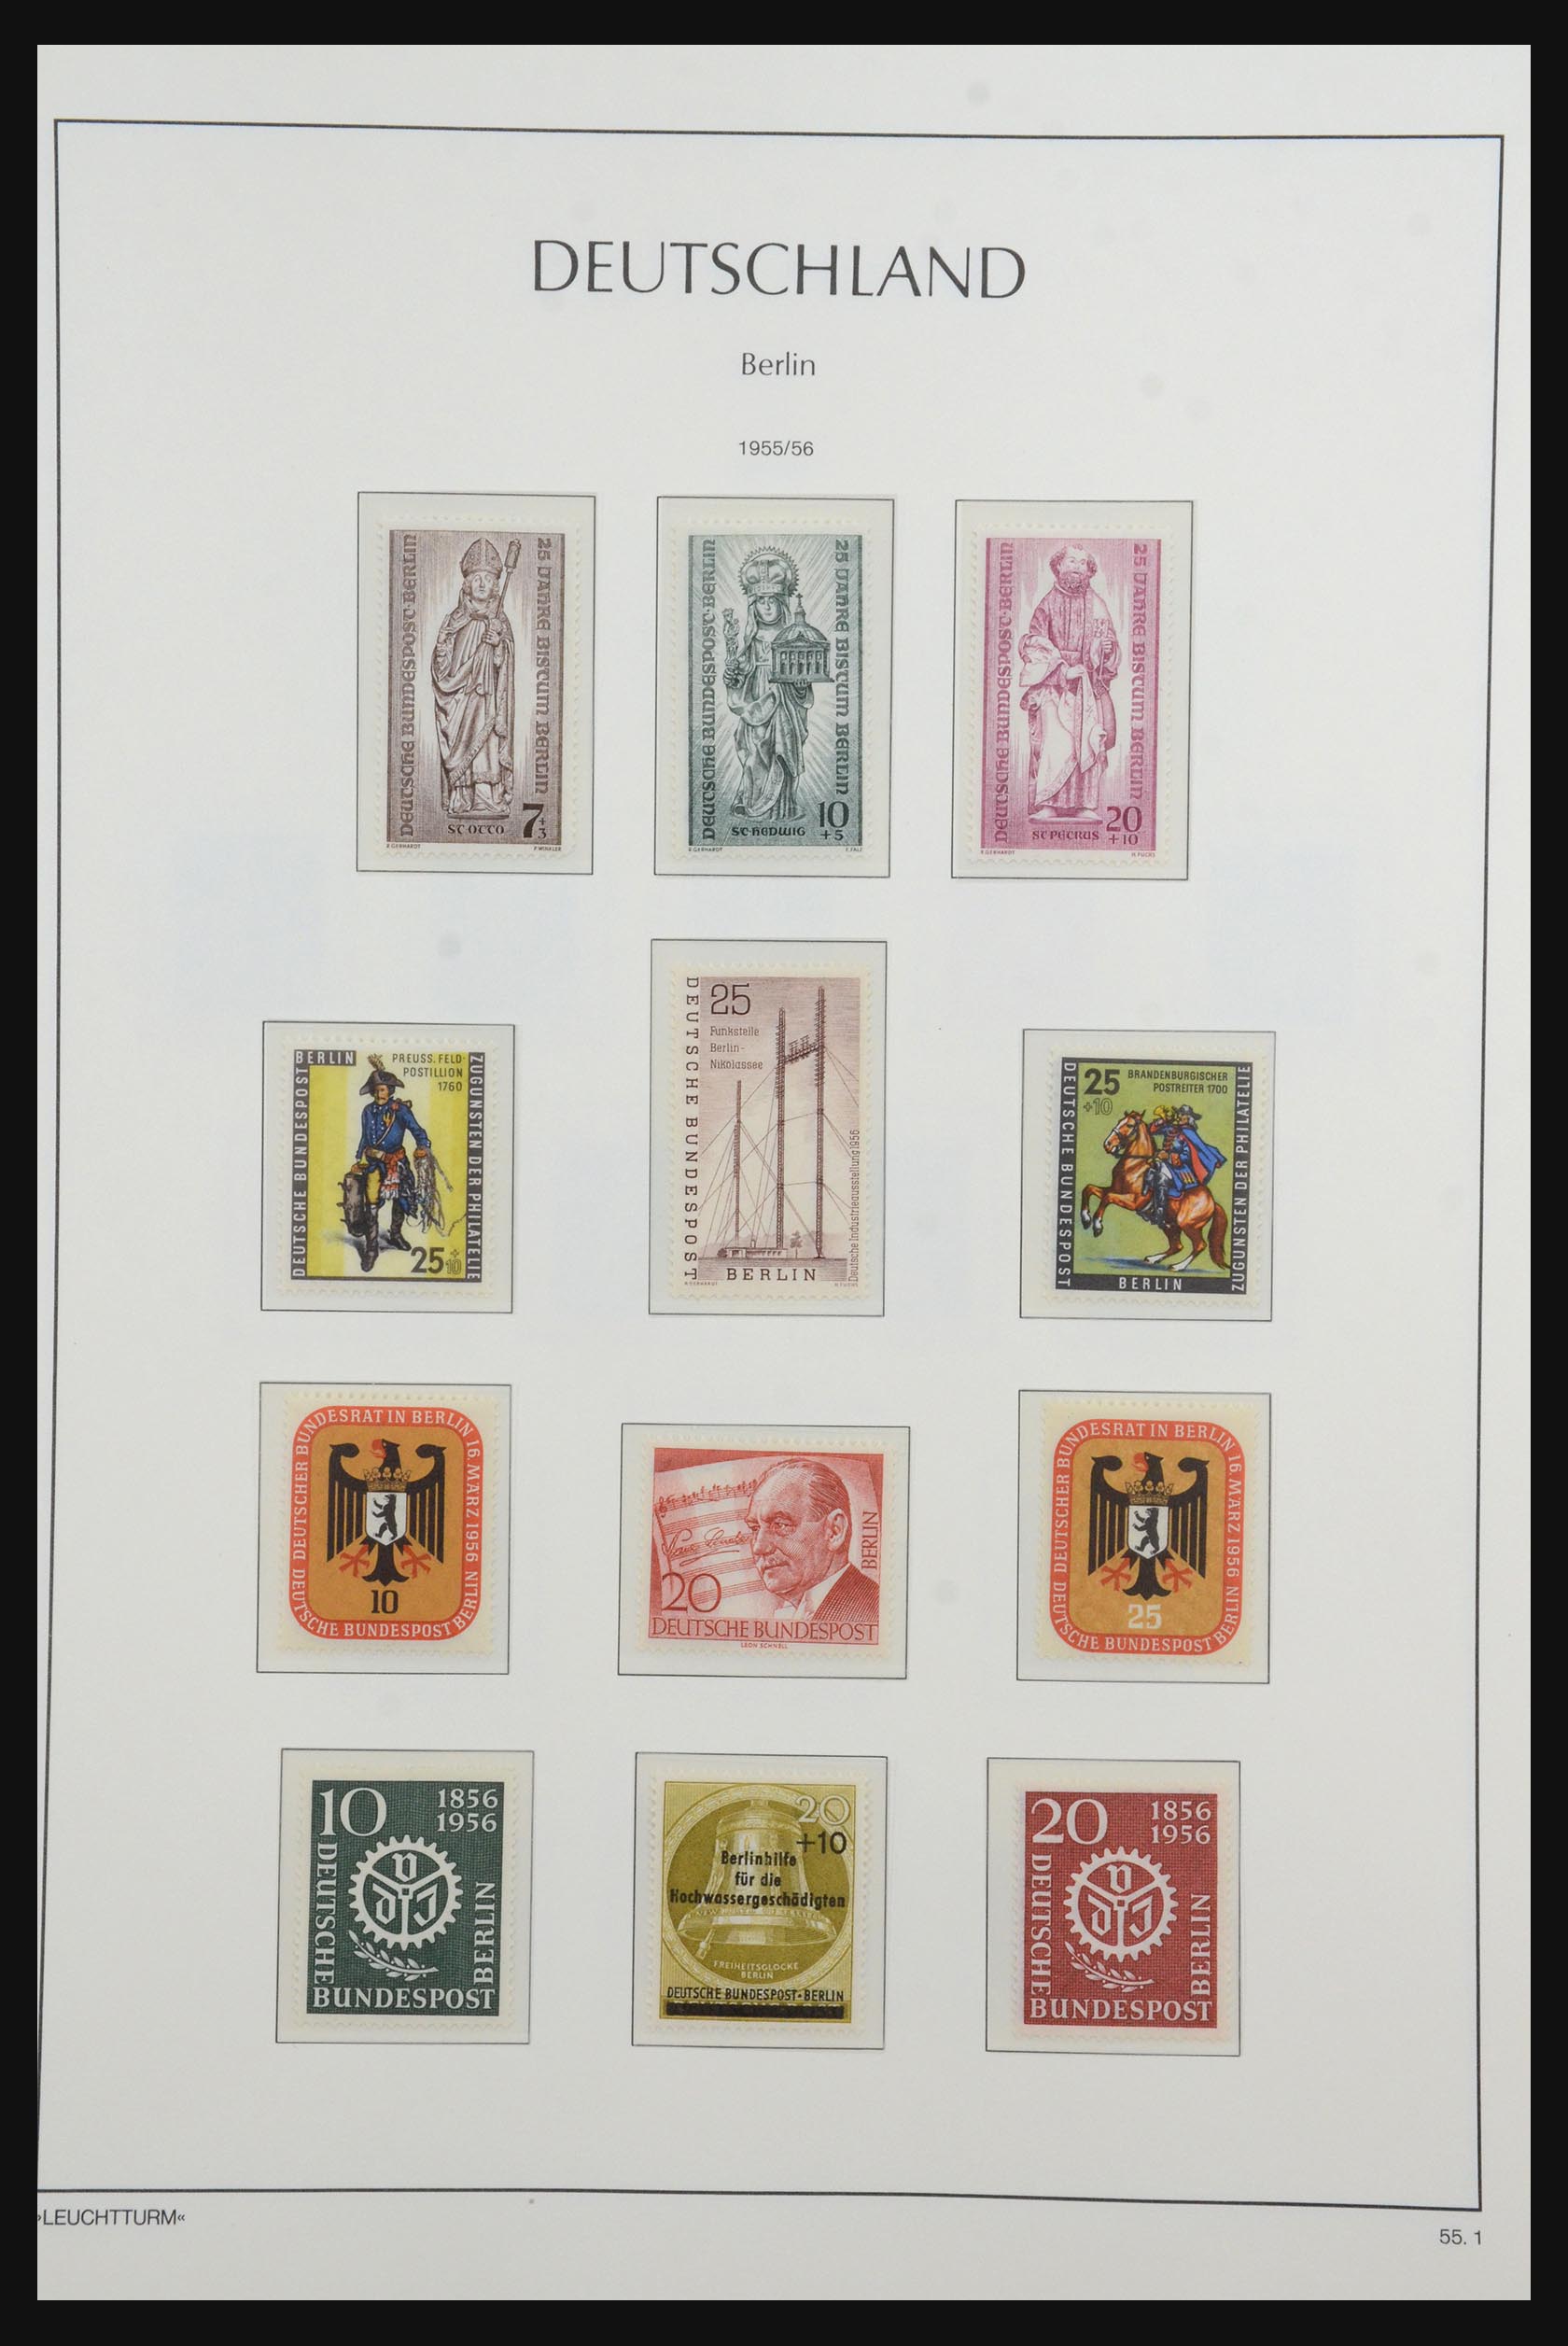 31601 011 - 31601 Bundespost, Berlin and Saar 1948-2008.